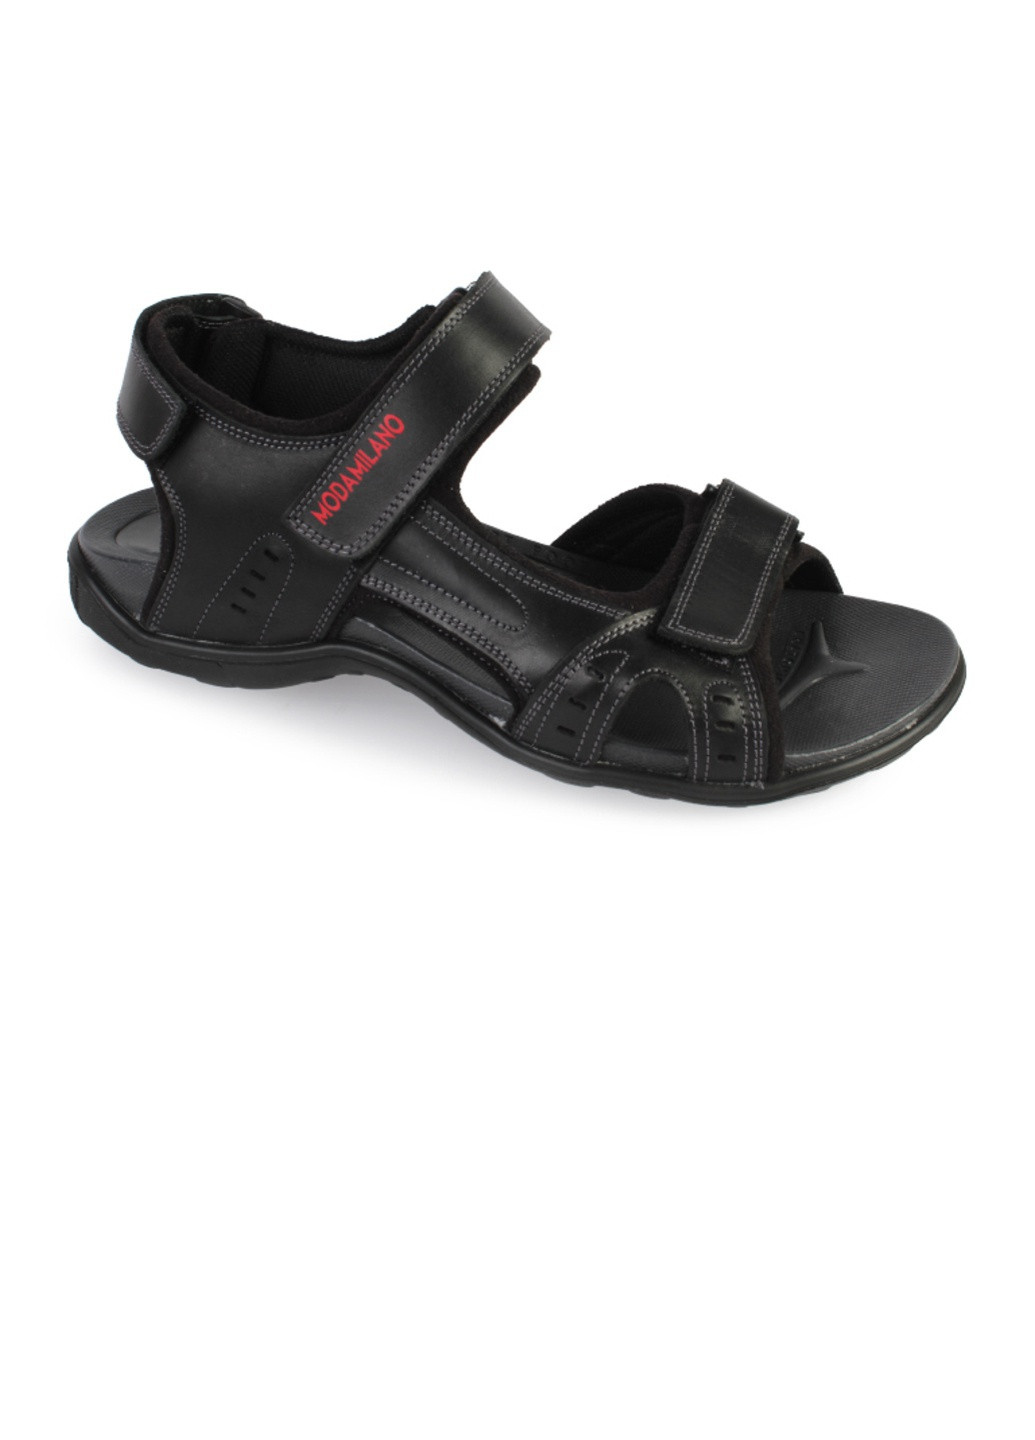 Спортивные сандалии мужские бренда 9301312_(1) One Way на липучке